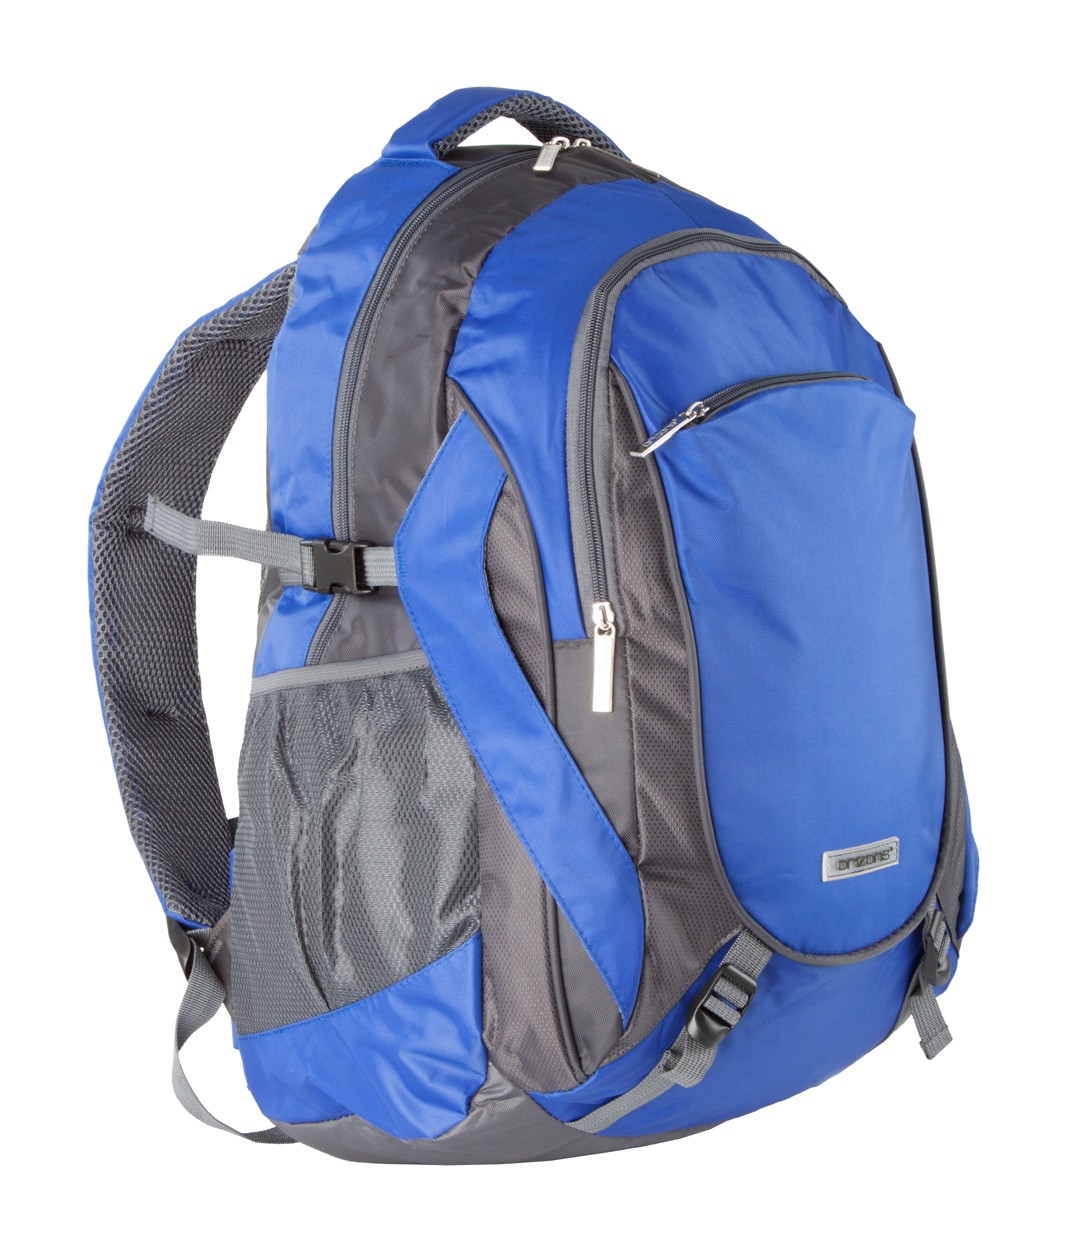 Backpack Virtux - Blue / Grey